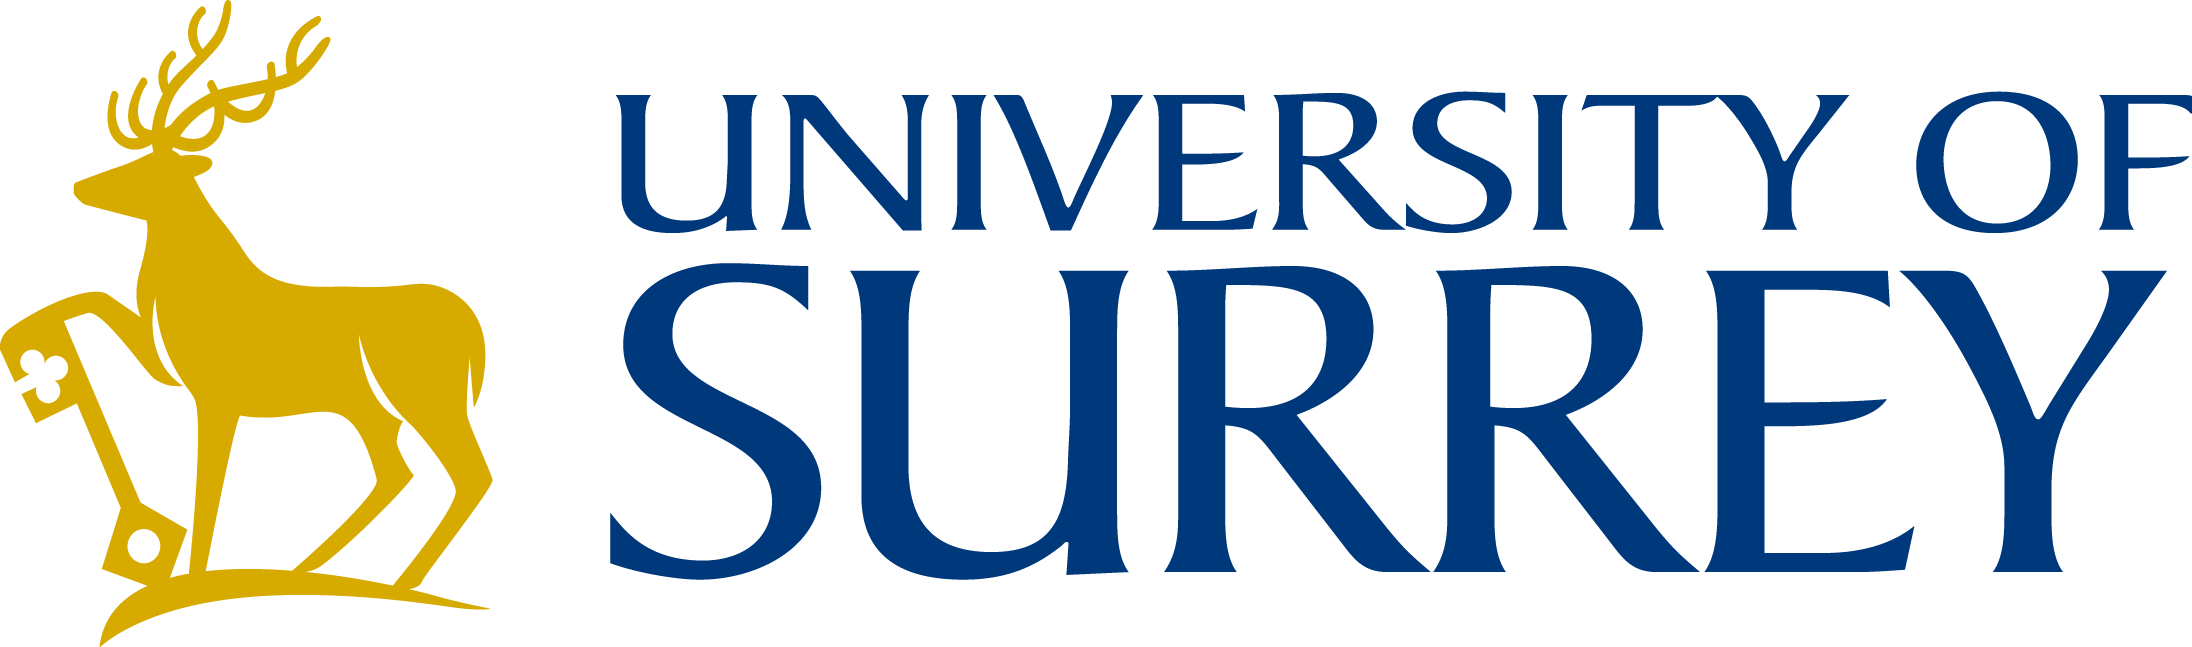 surrey-uni-logo-1 (1)